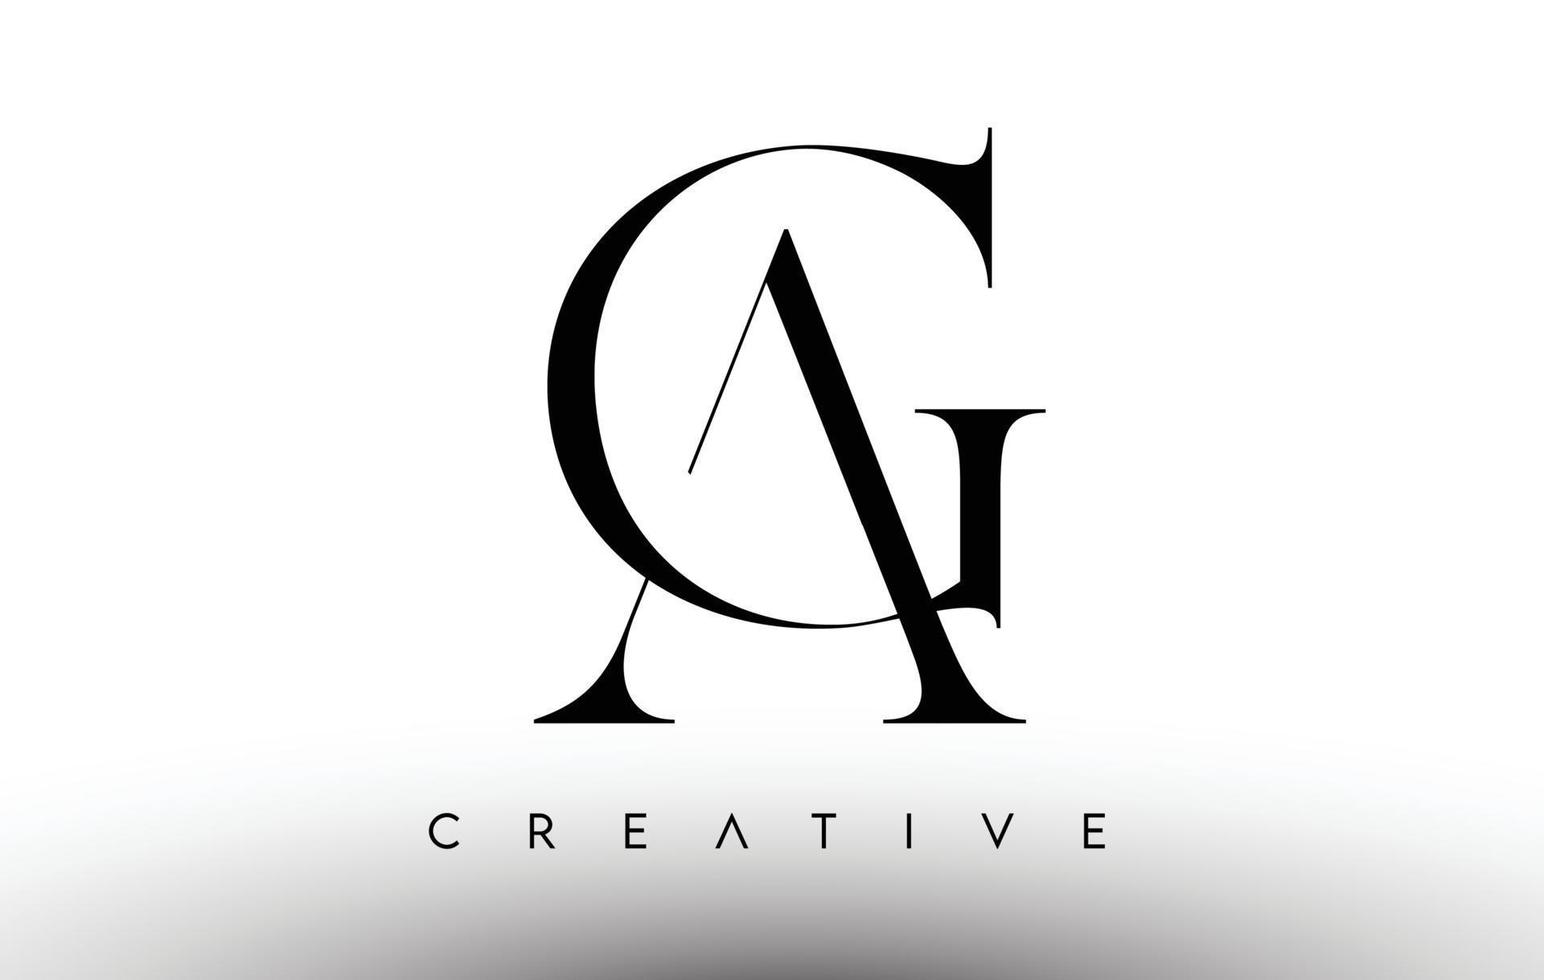 ag minimalistisch serif modern letterlogo in zwart-wit. ag creatieve serif logo ontwerp pictogram vector